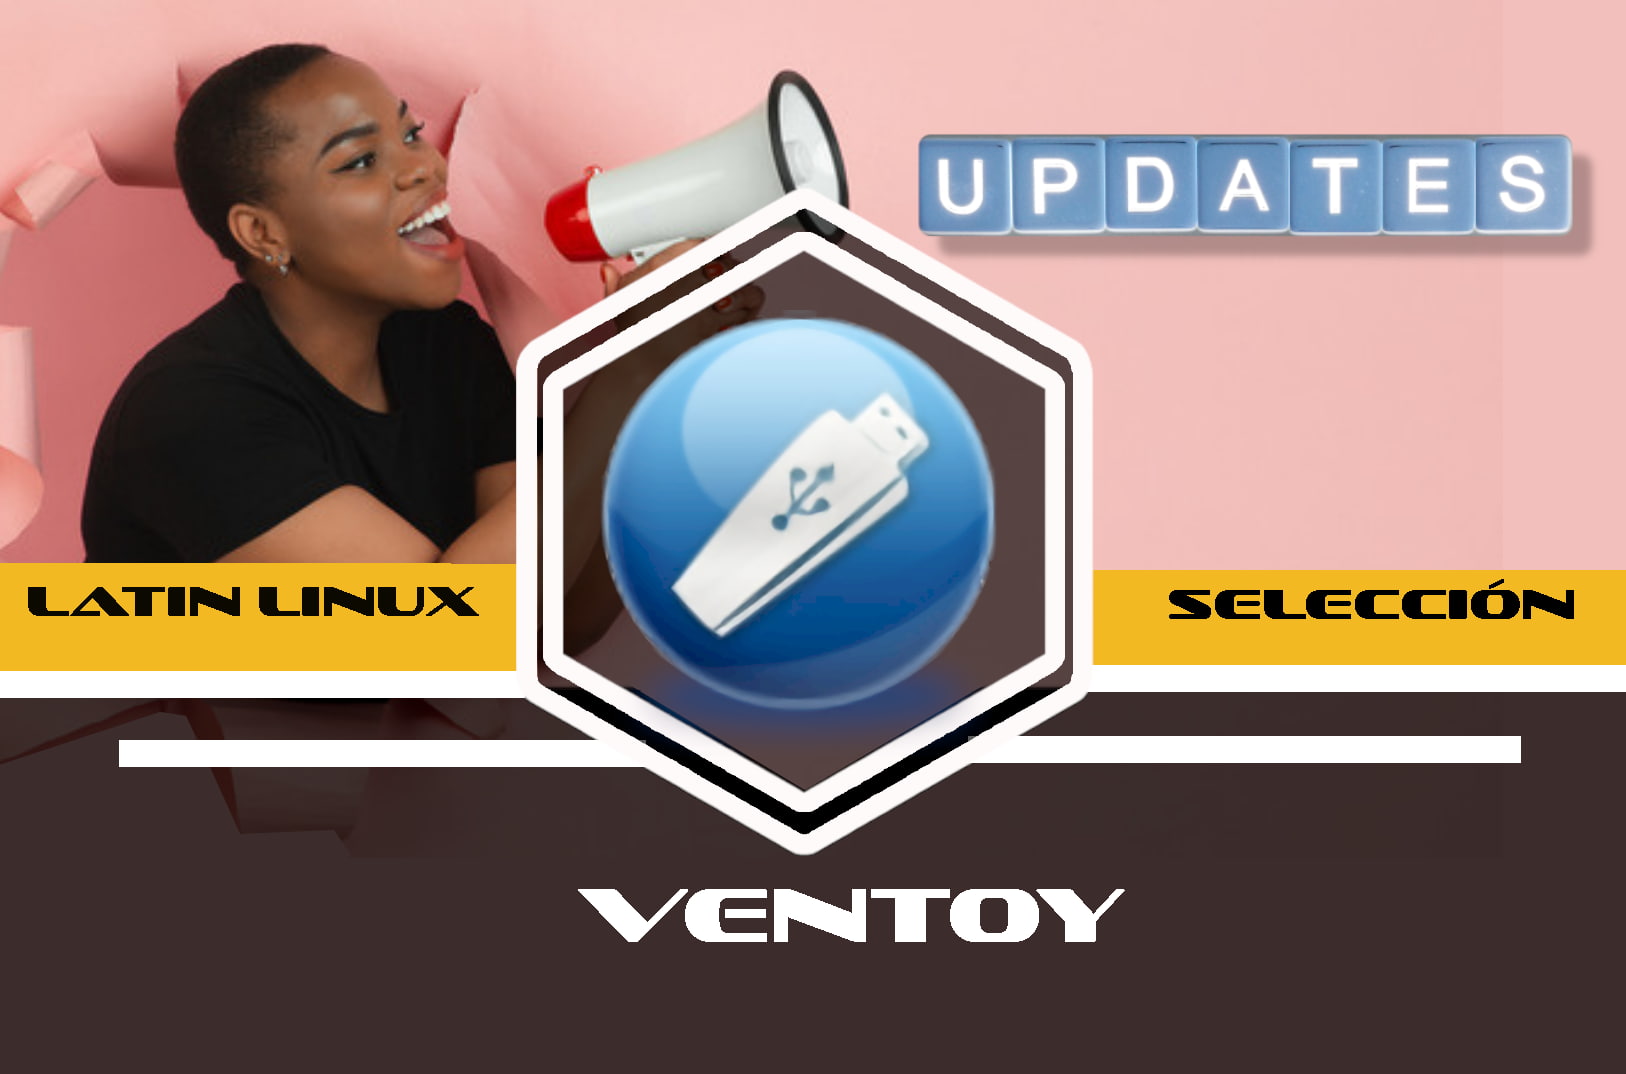 Ventoy Update. - Latin Linux